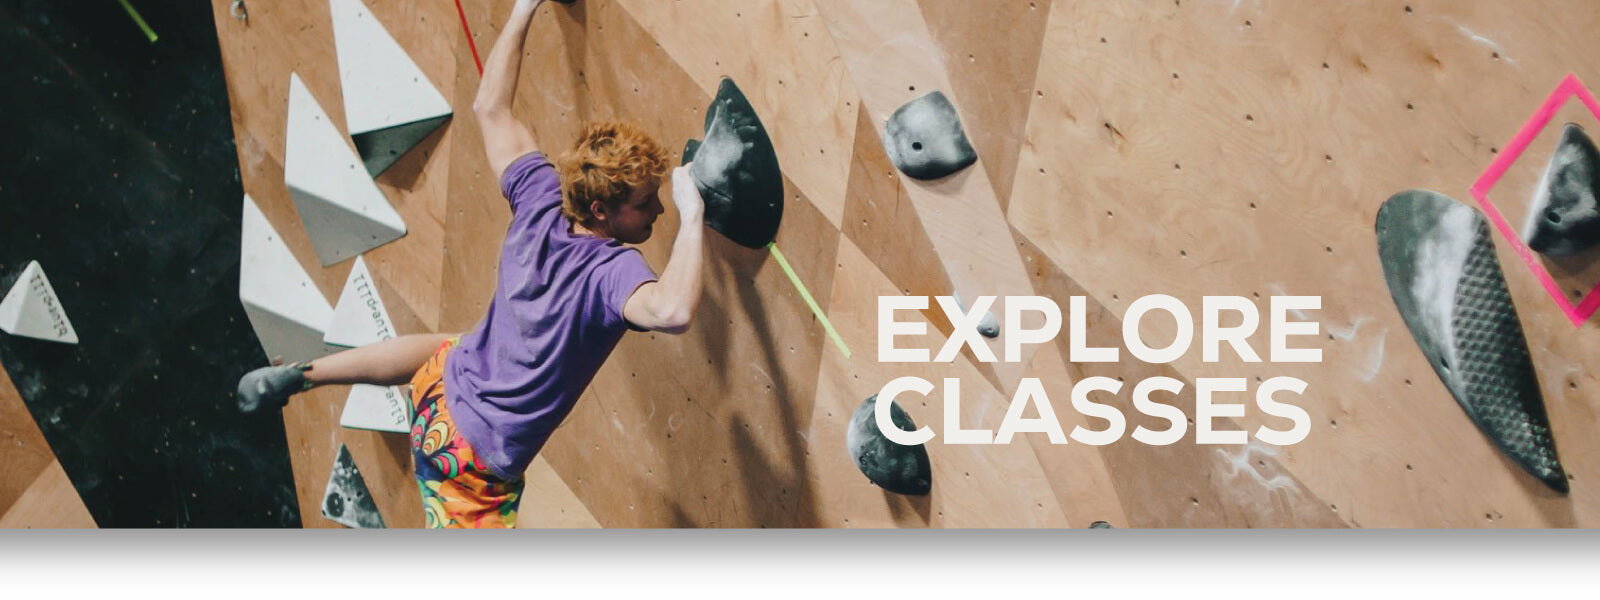 Explore classes - Man indoor rock climbing